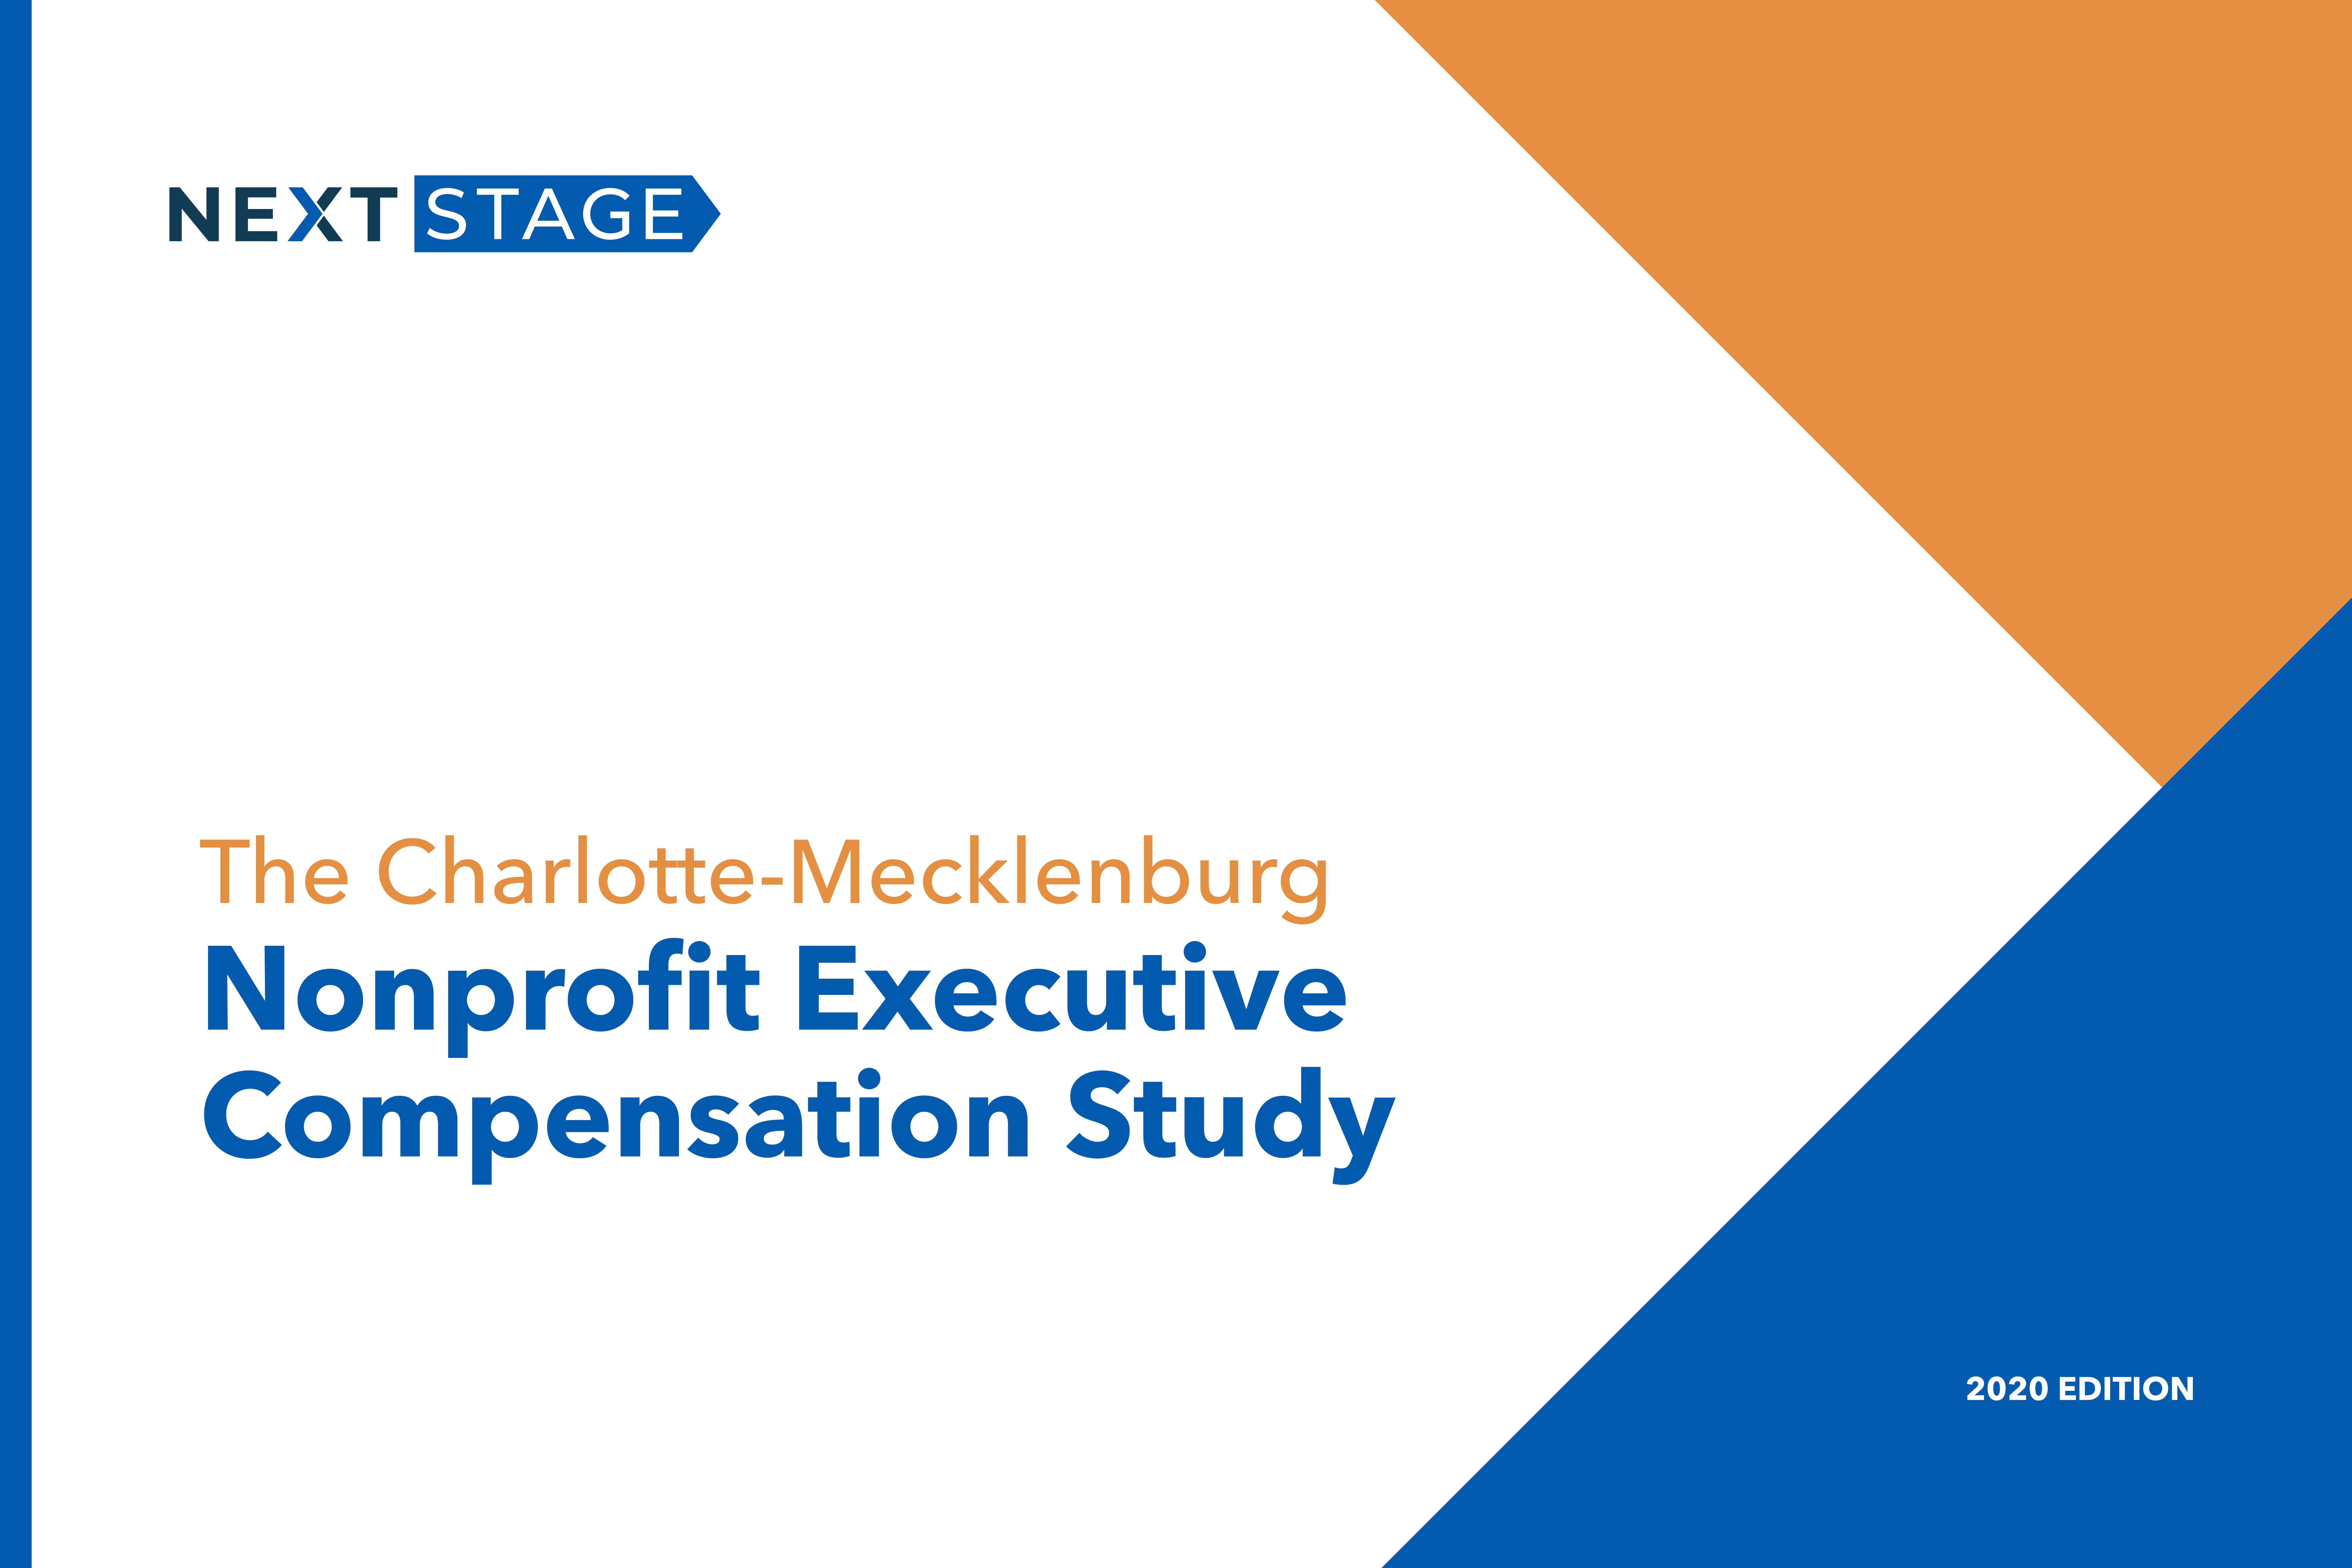 The Charlotte-Mecklenburg Nonprofit Executive Compensation Study